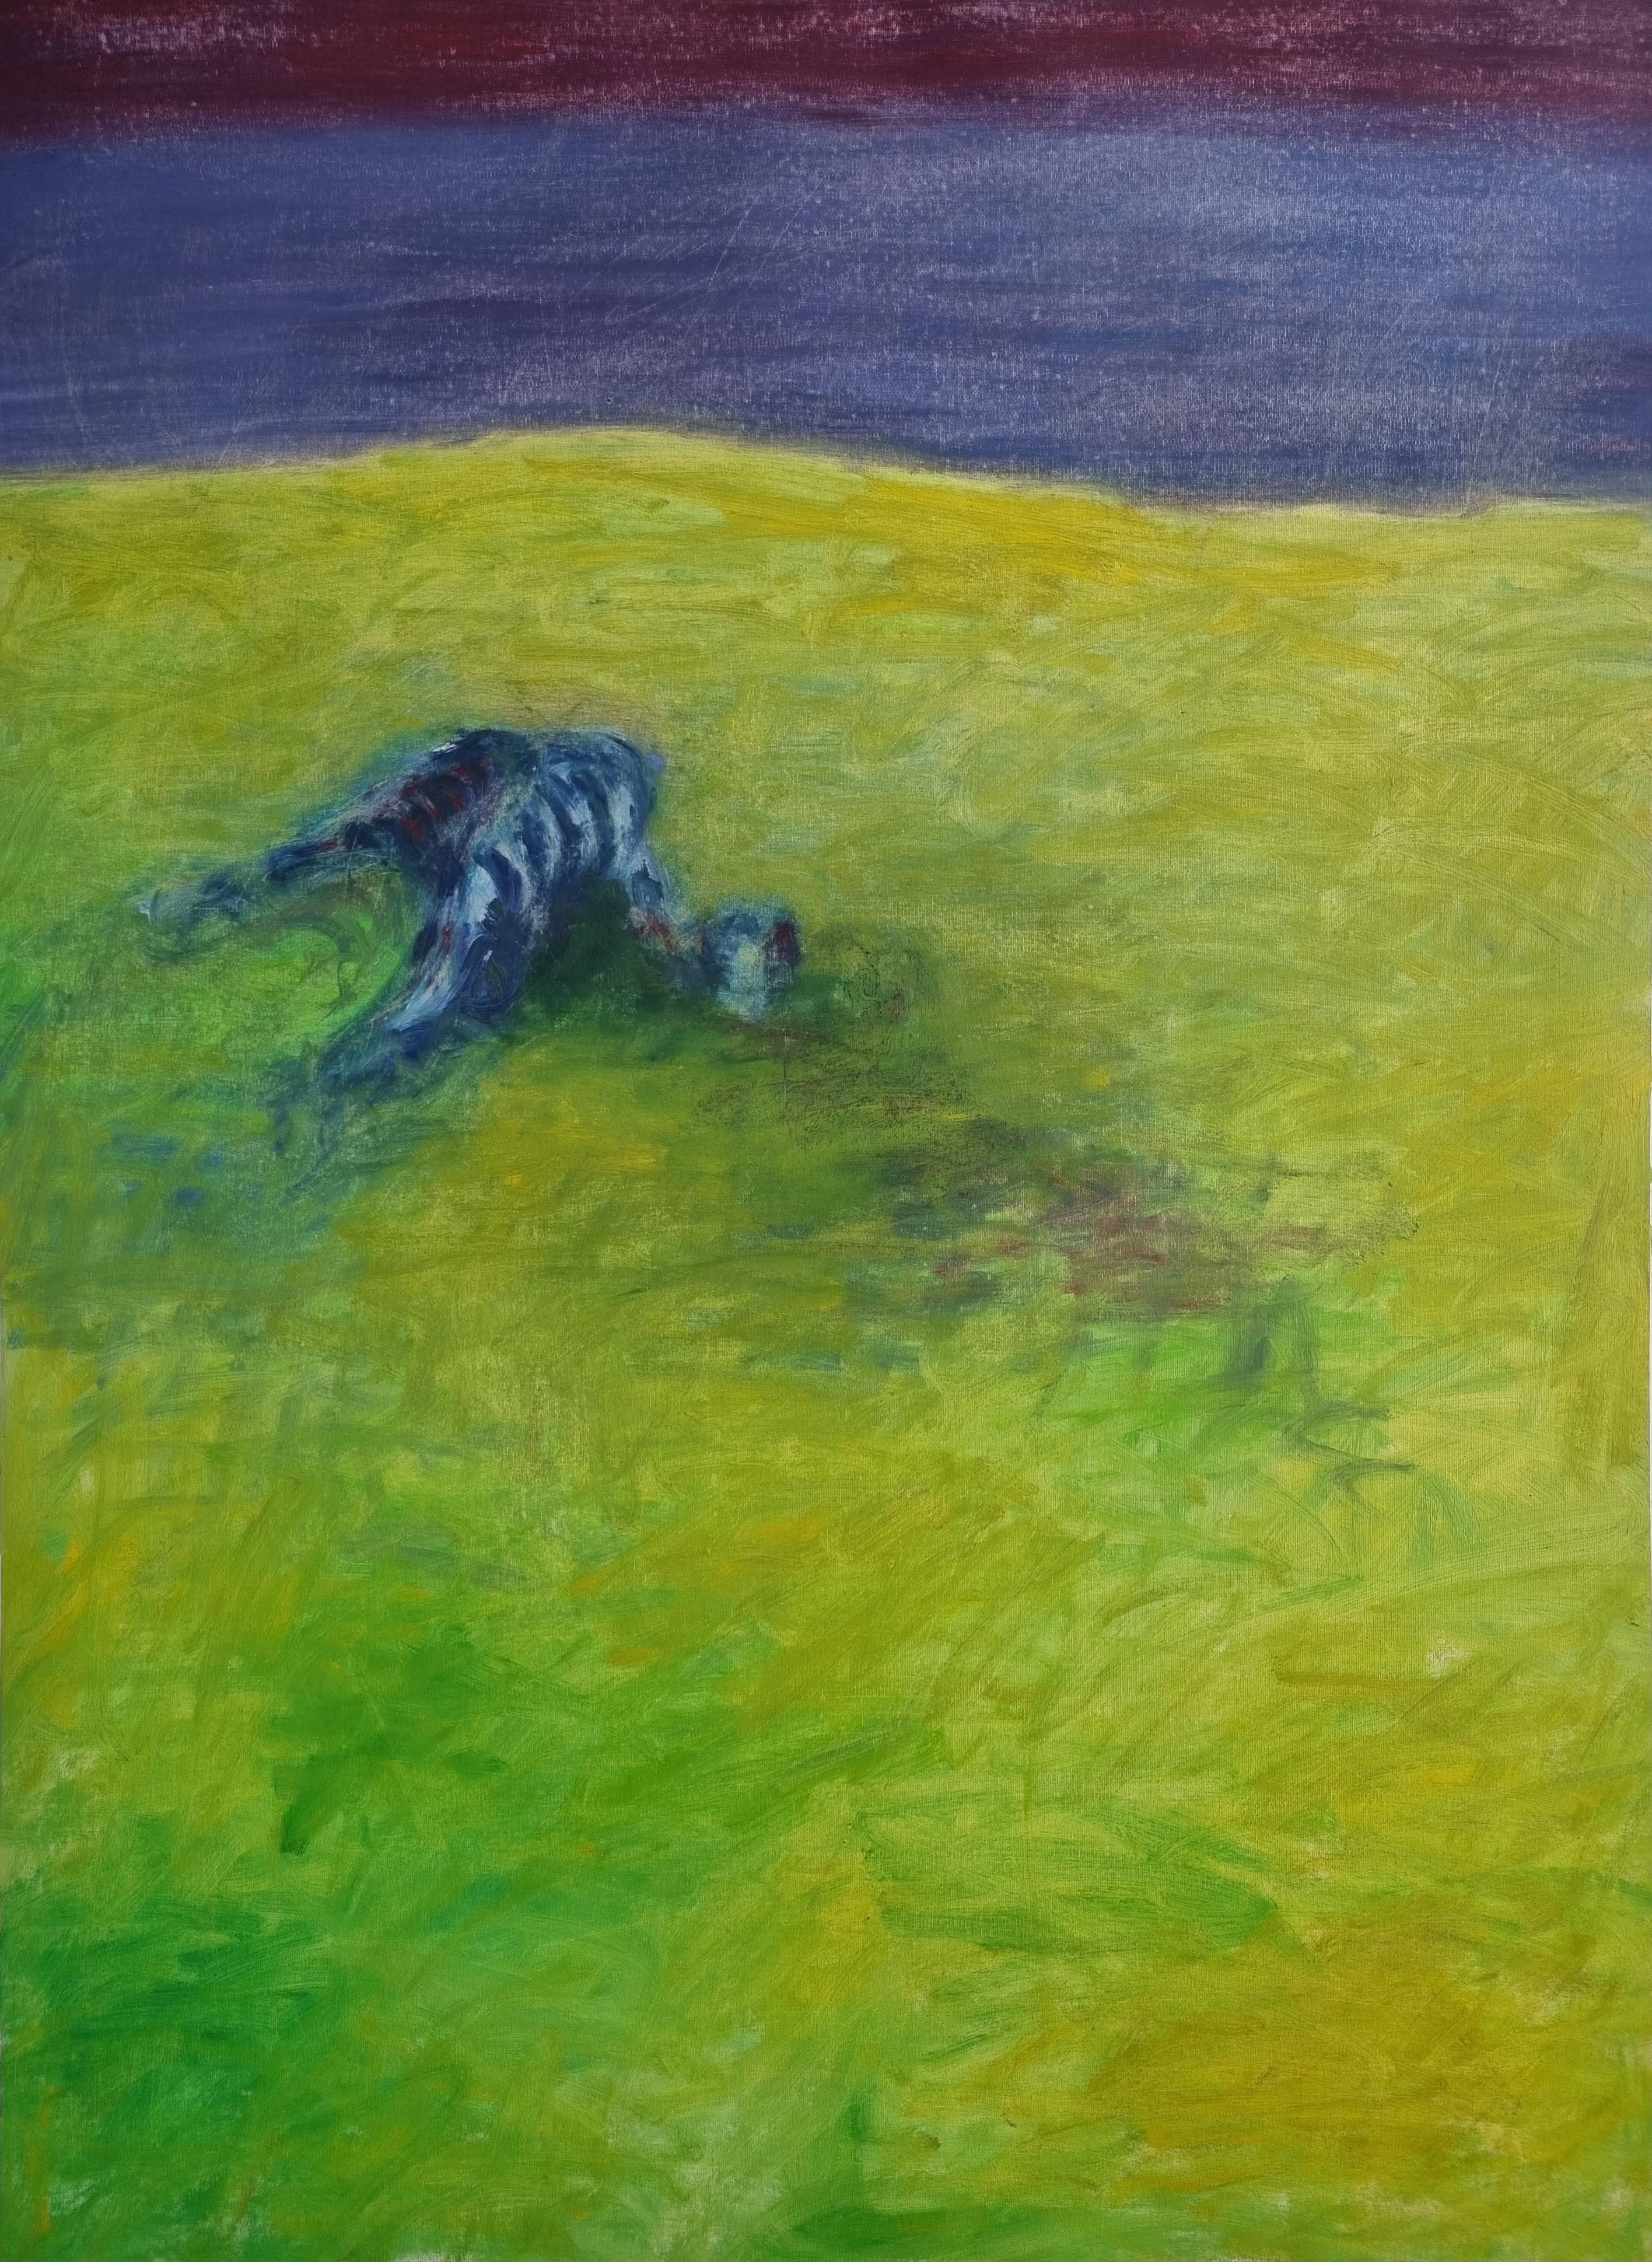 Body in the Field 1 - 21st Century, paysage, vert, bleu, peinture